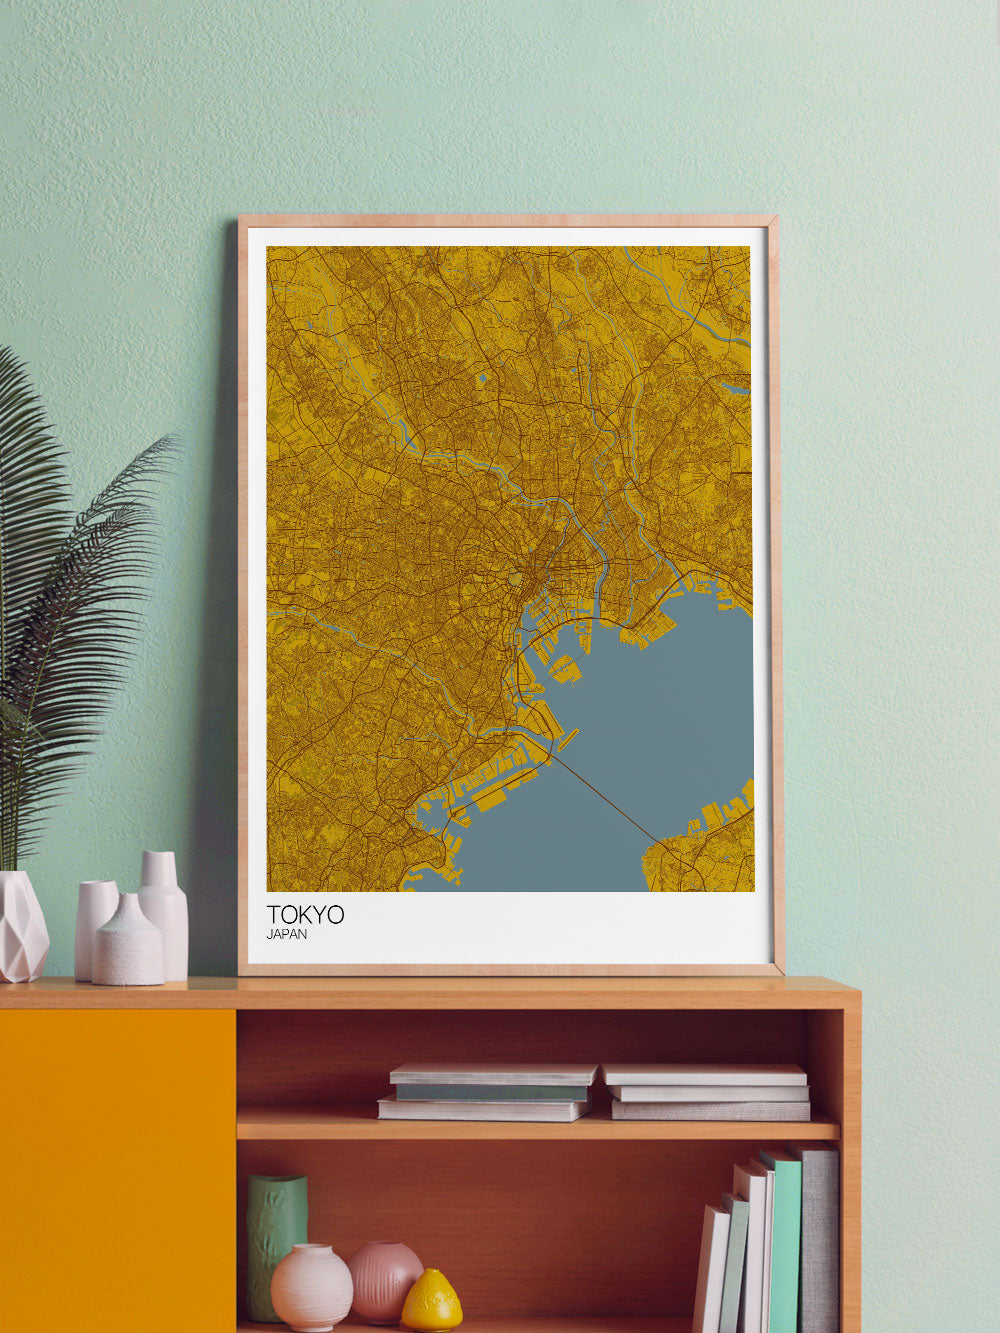 Tokyo City Map Print n a frame on a shelf